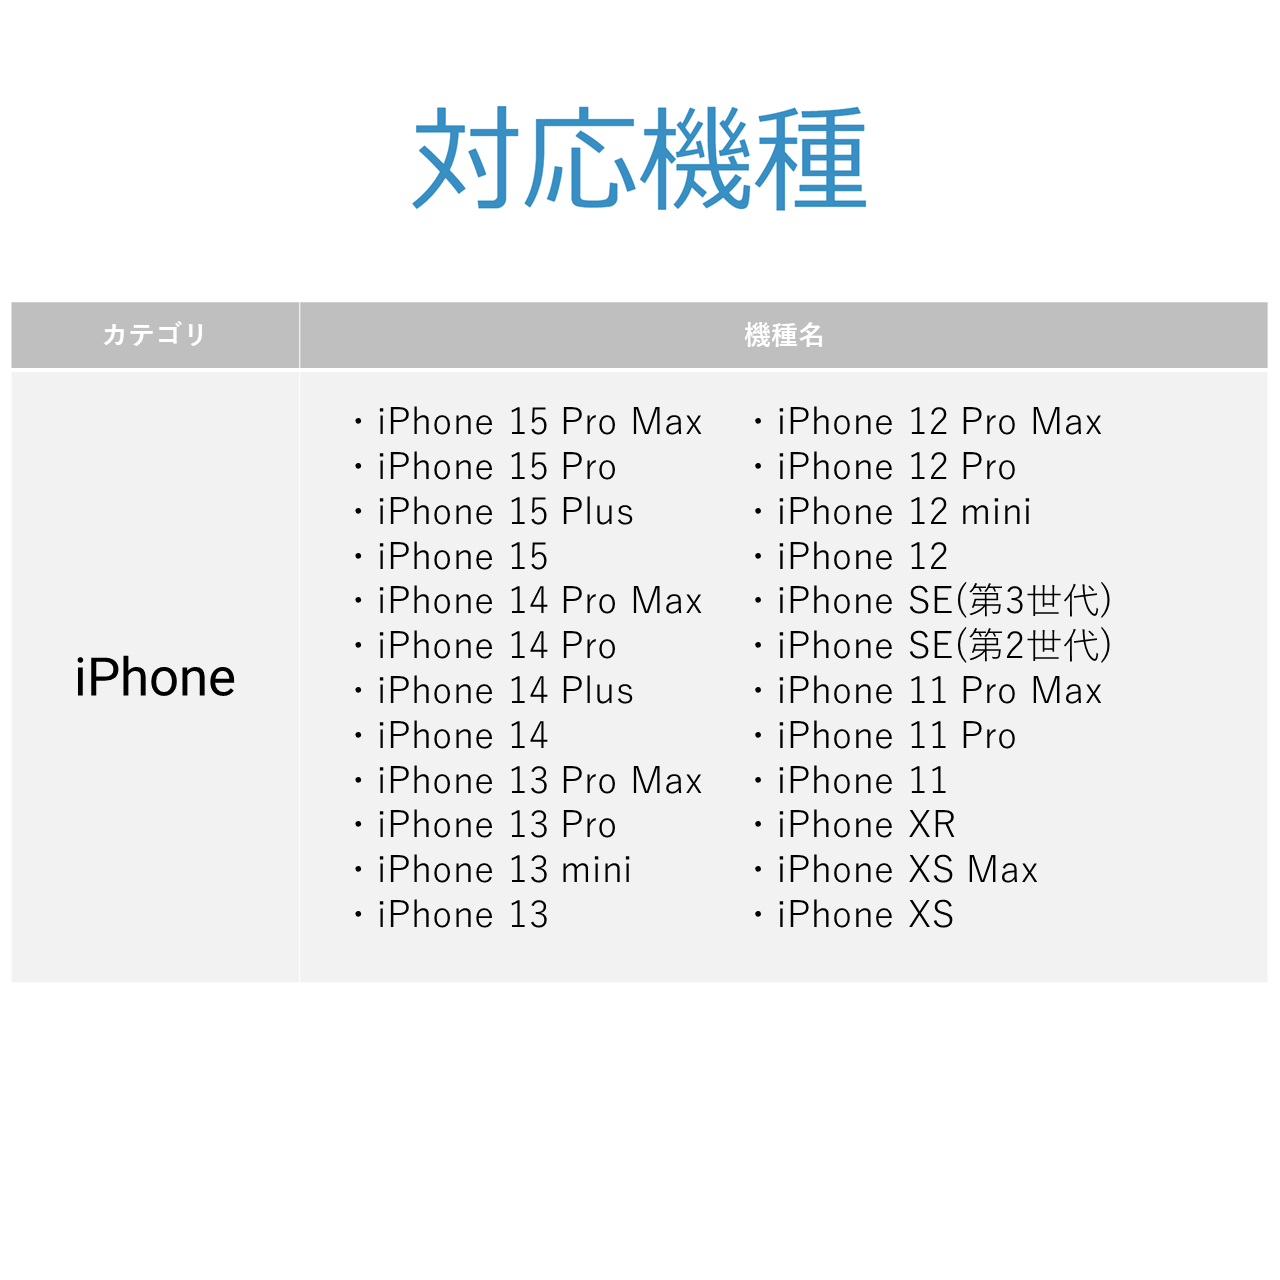 【China】eSIM 7GB 8days